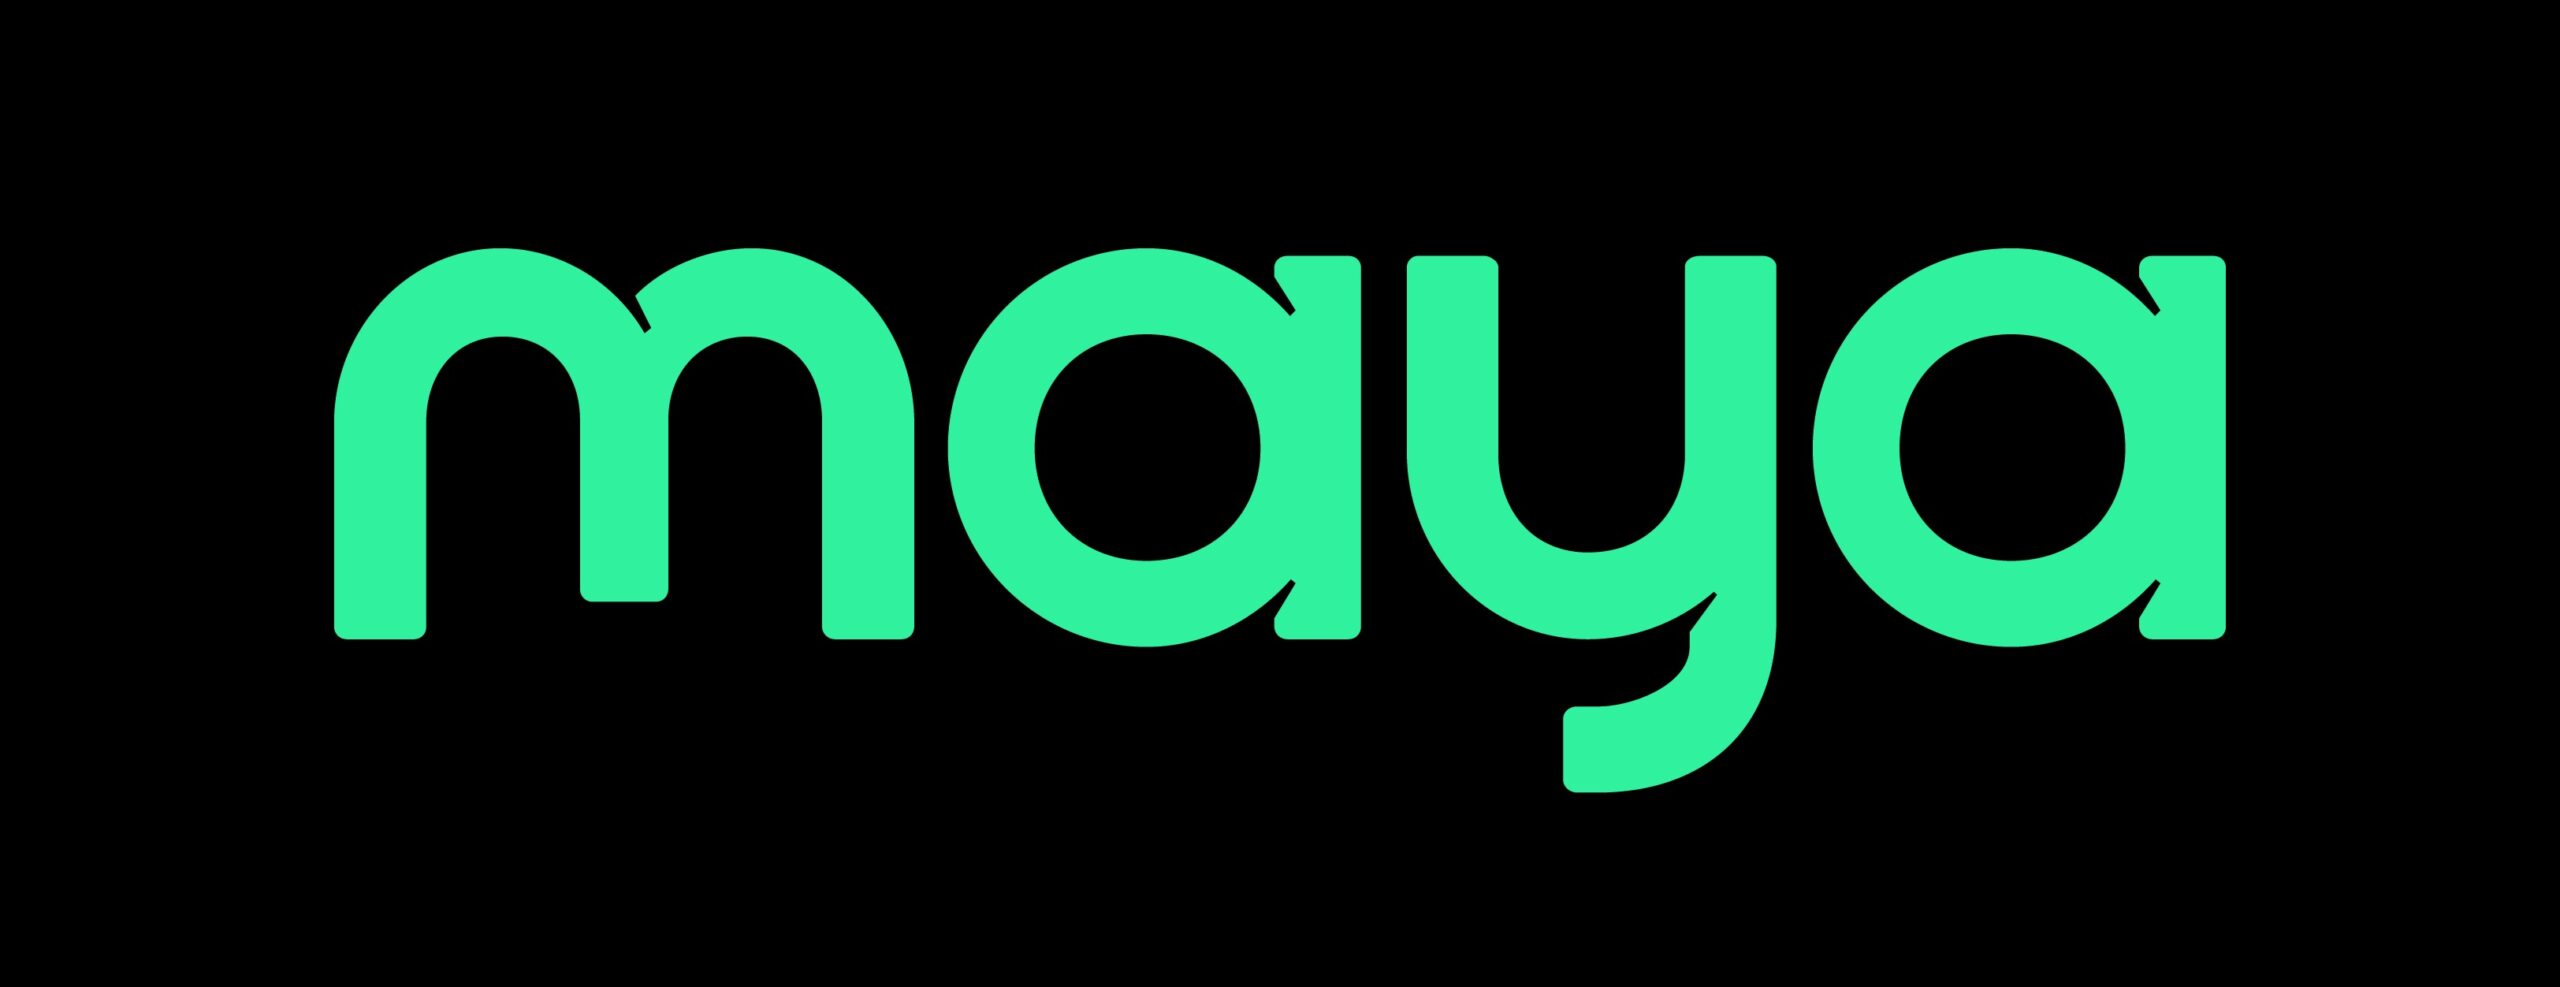 Maya_Maya-is-1-digital-bank-in-PH-scaled